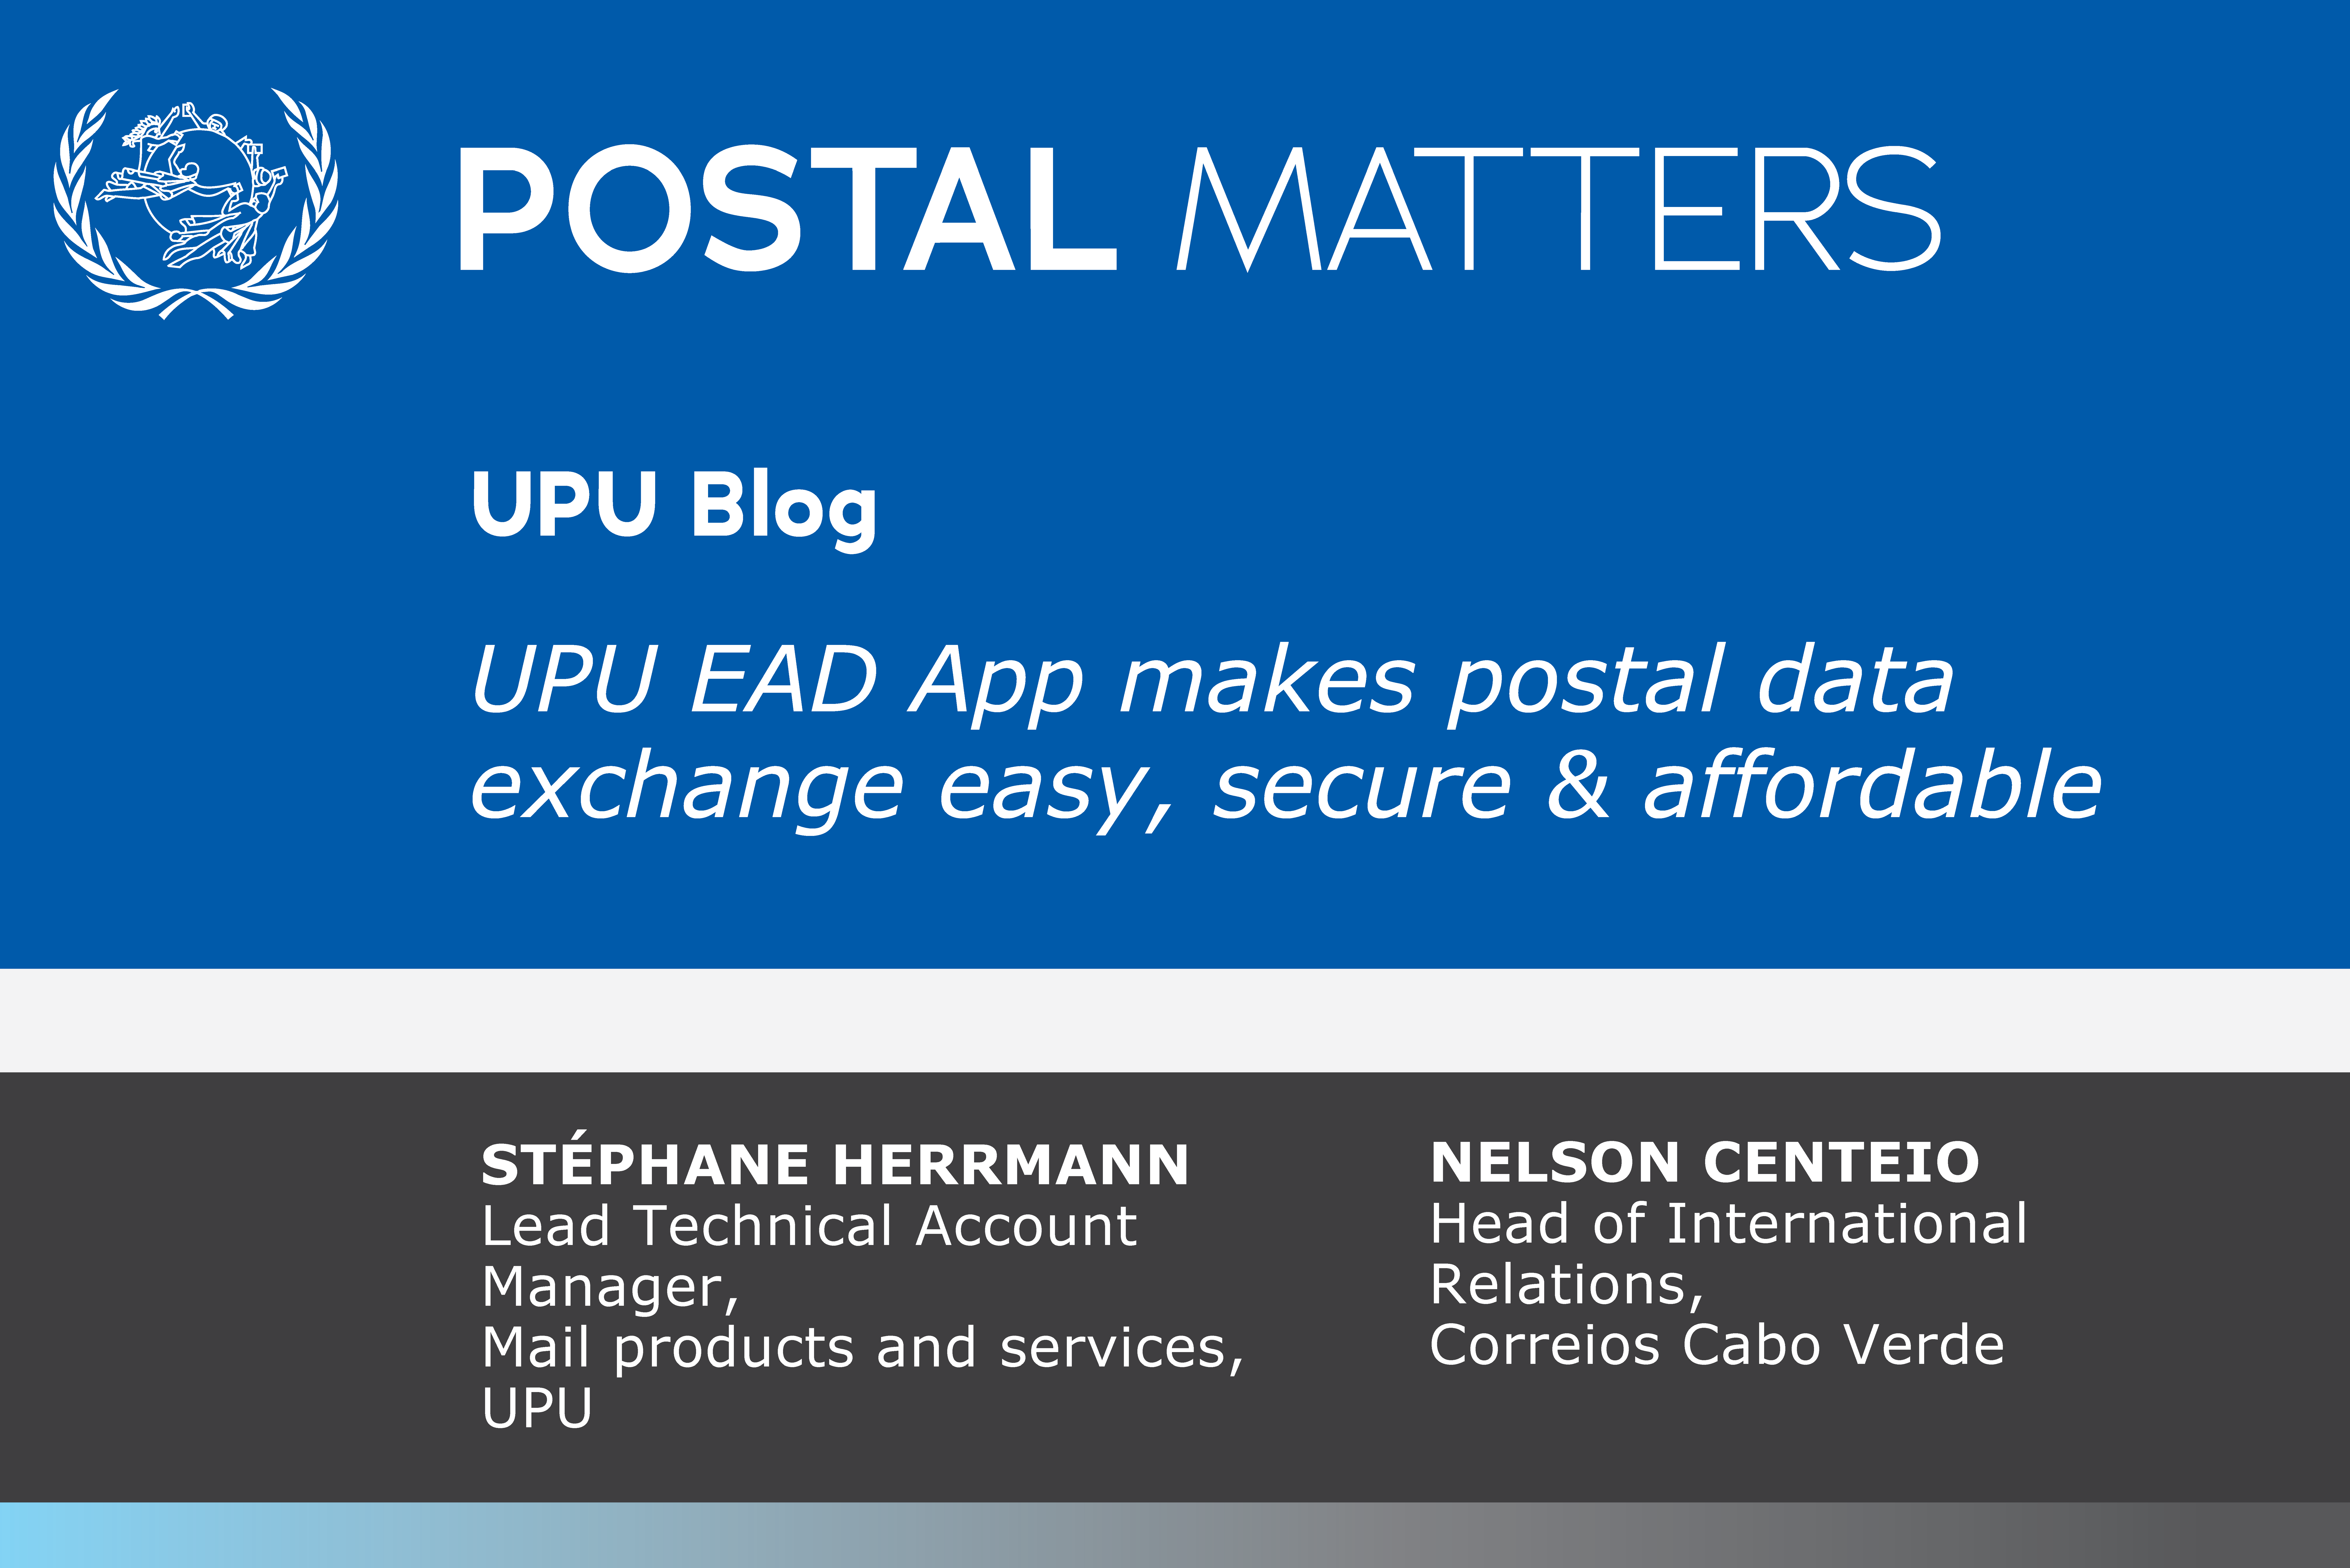 UPU EAD App makes postal data exchange easy, secure & affordable